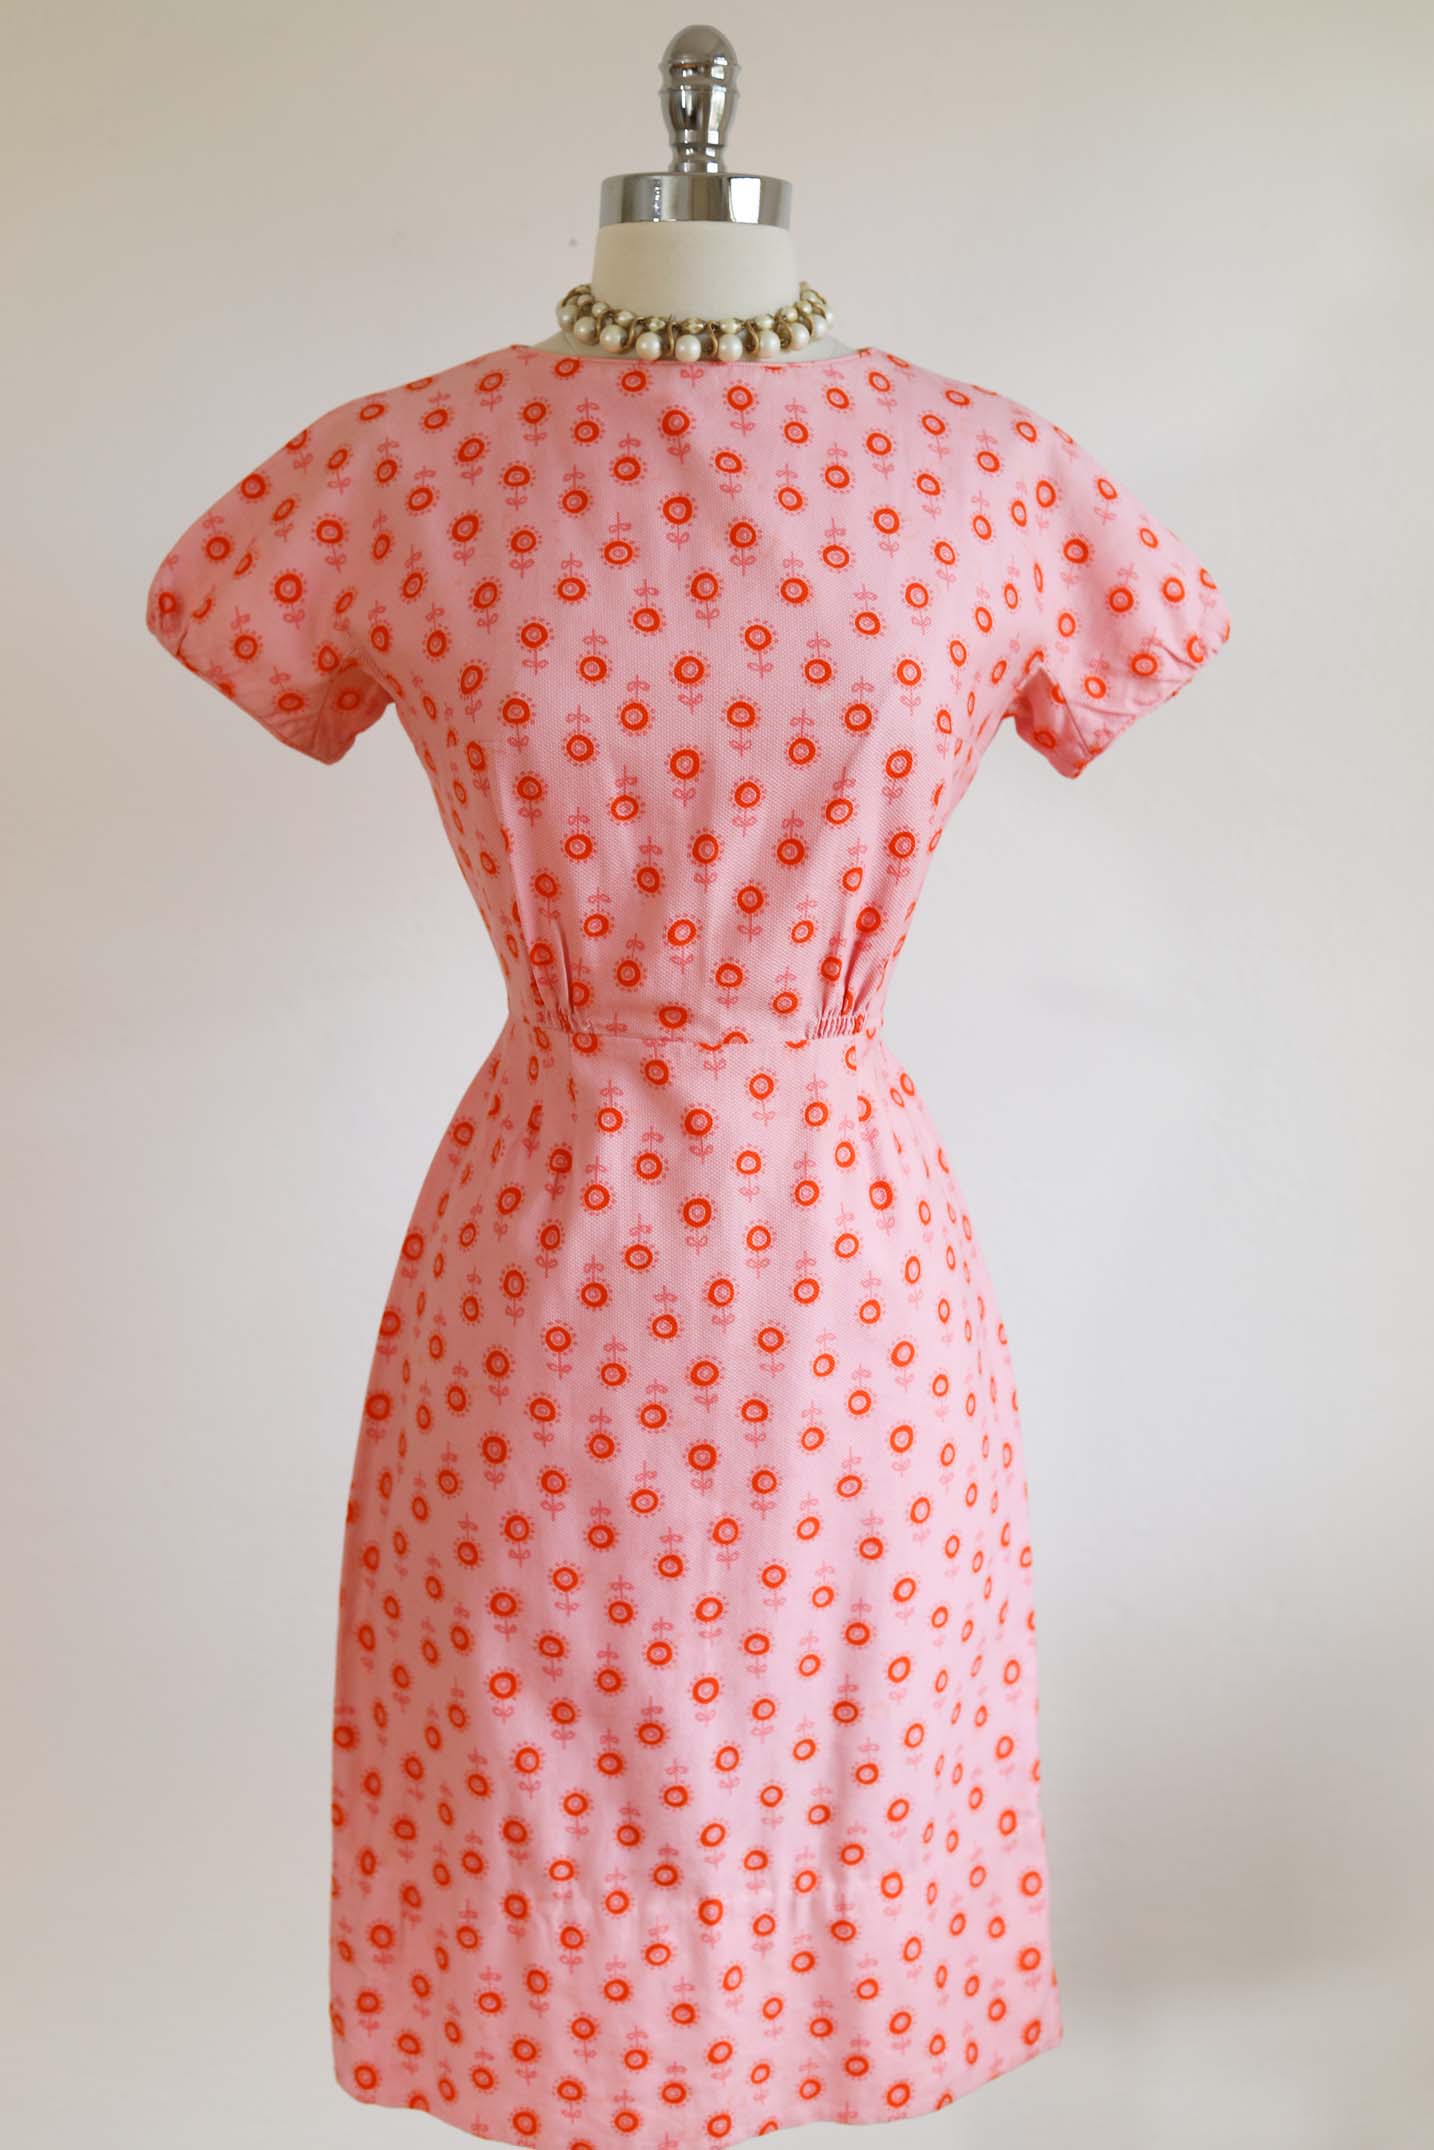 Vintage 1950s Dress - SWEETIE PIE Lanz Original 1958 Dated Pink + Tangerine Cotton Pique Size S